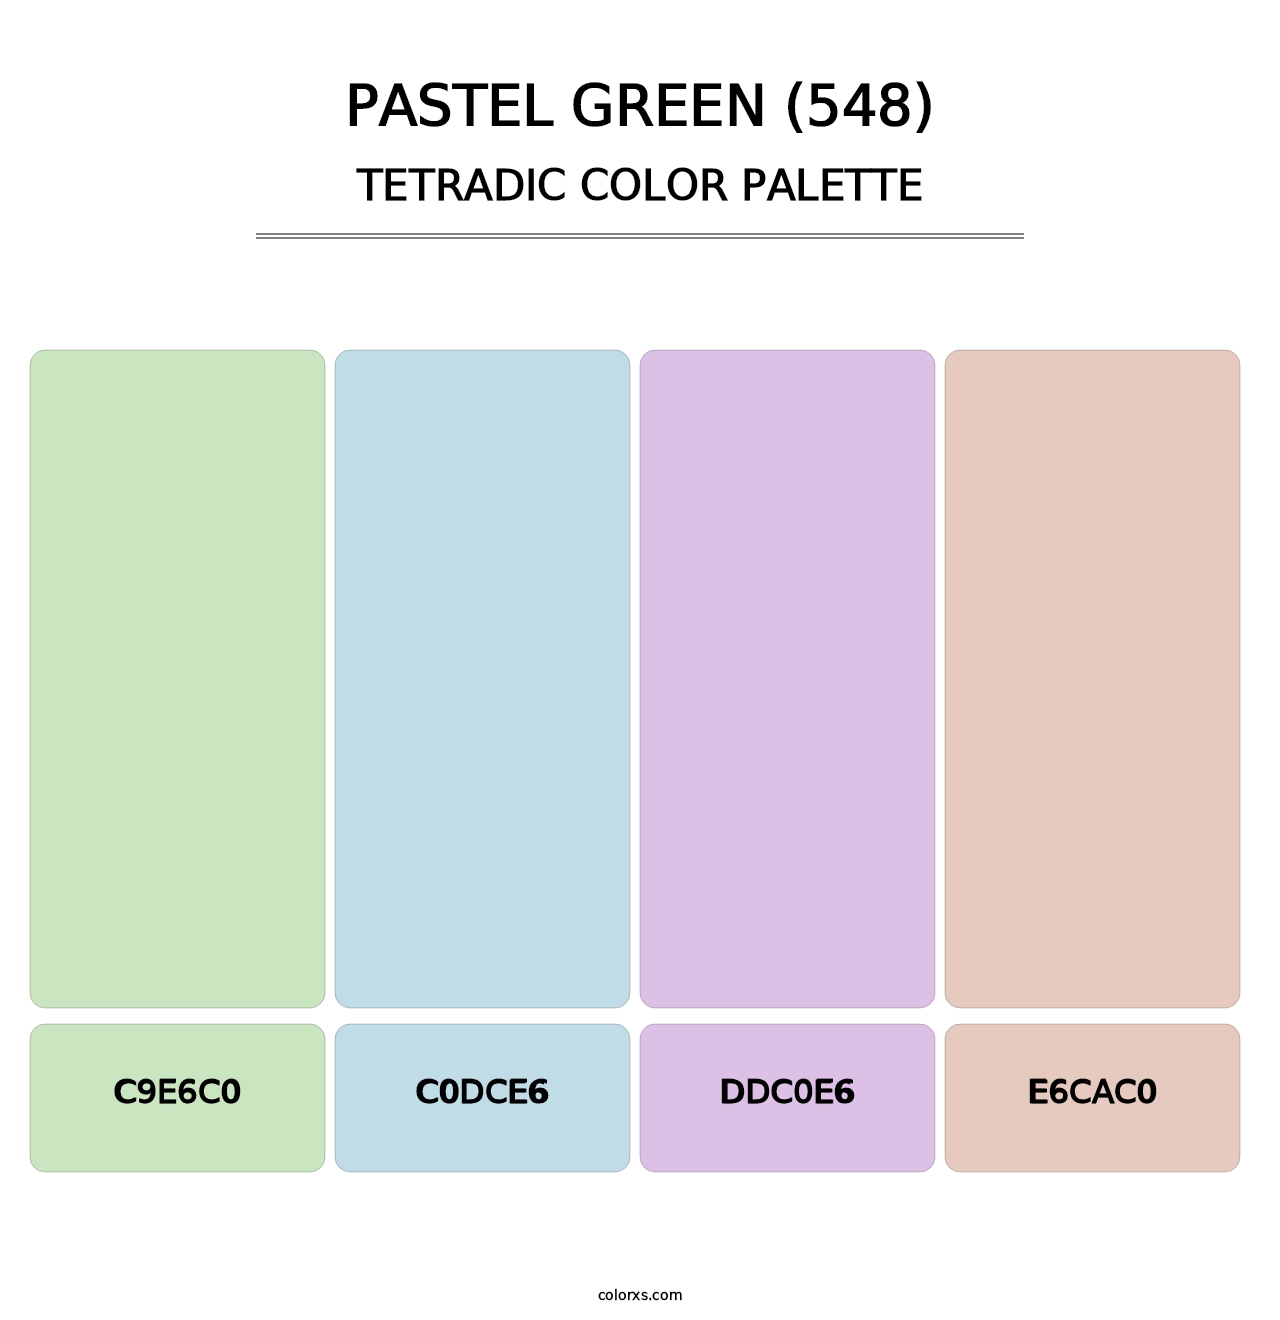 Pastel Green (548) - Tetradic Color Palette